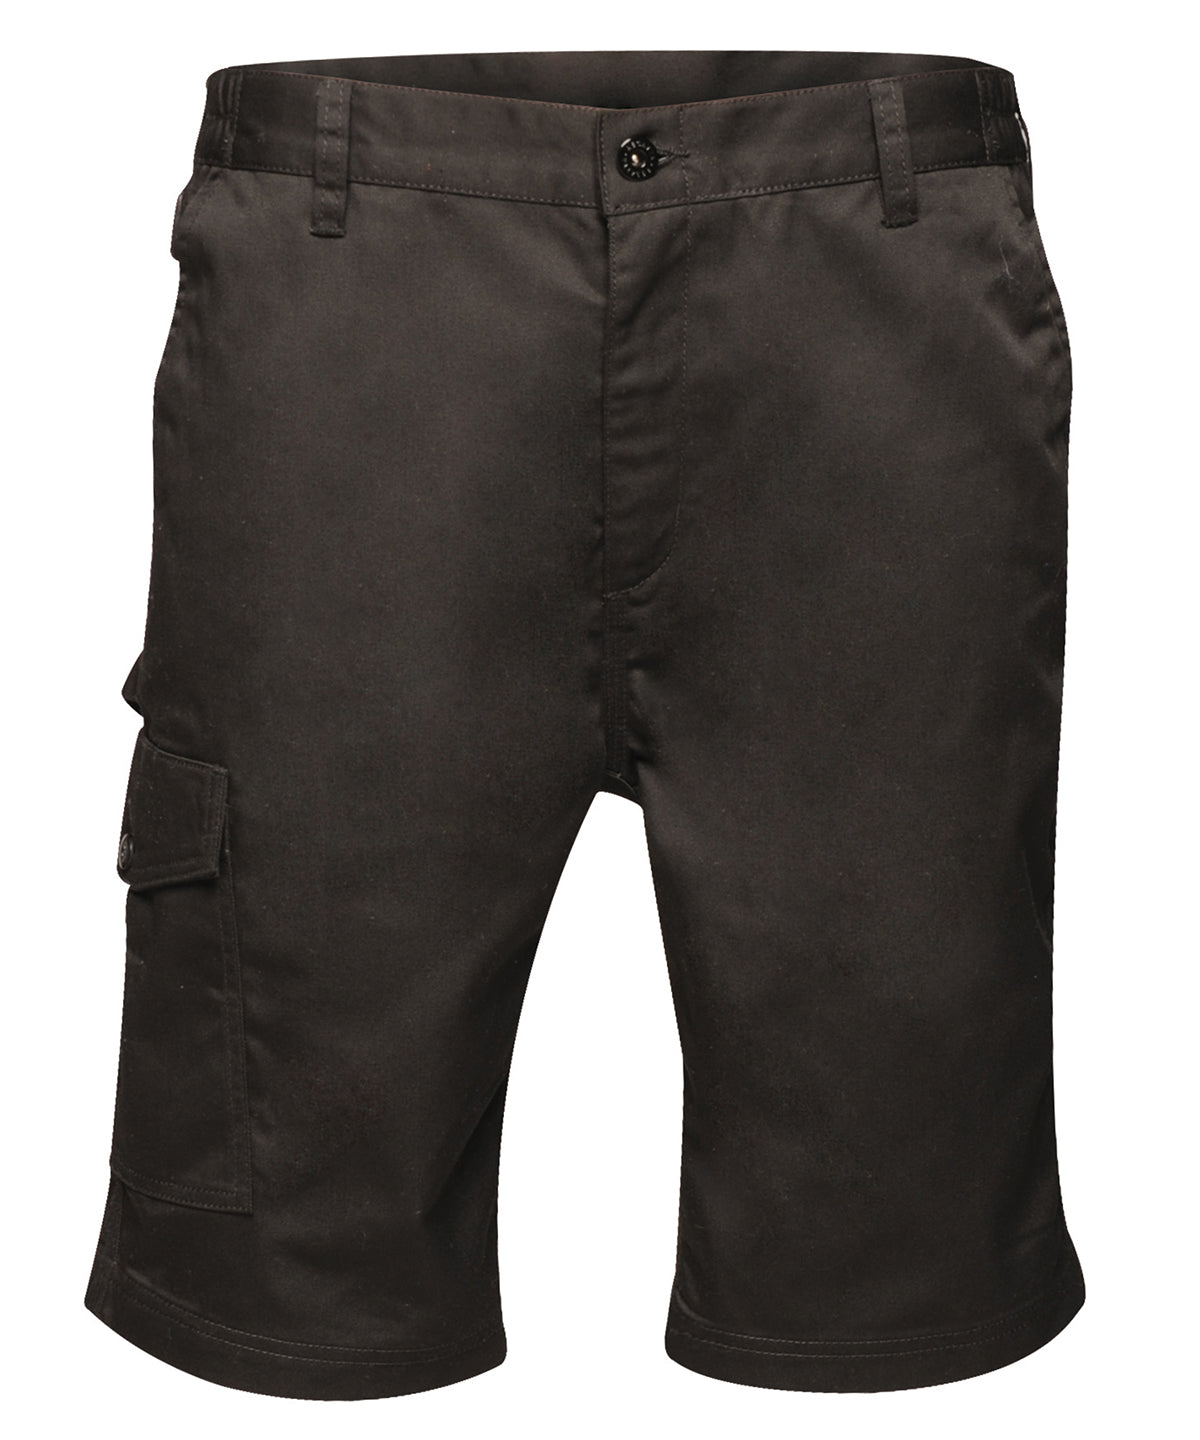 Regatta Pro cargo shorts